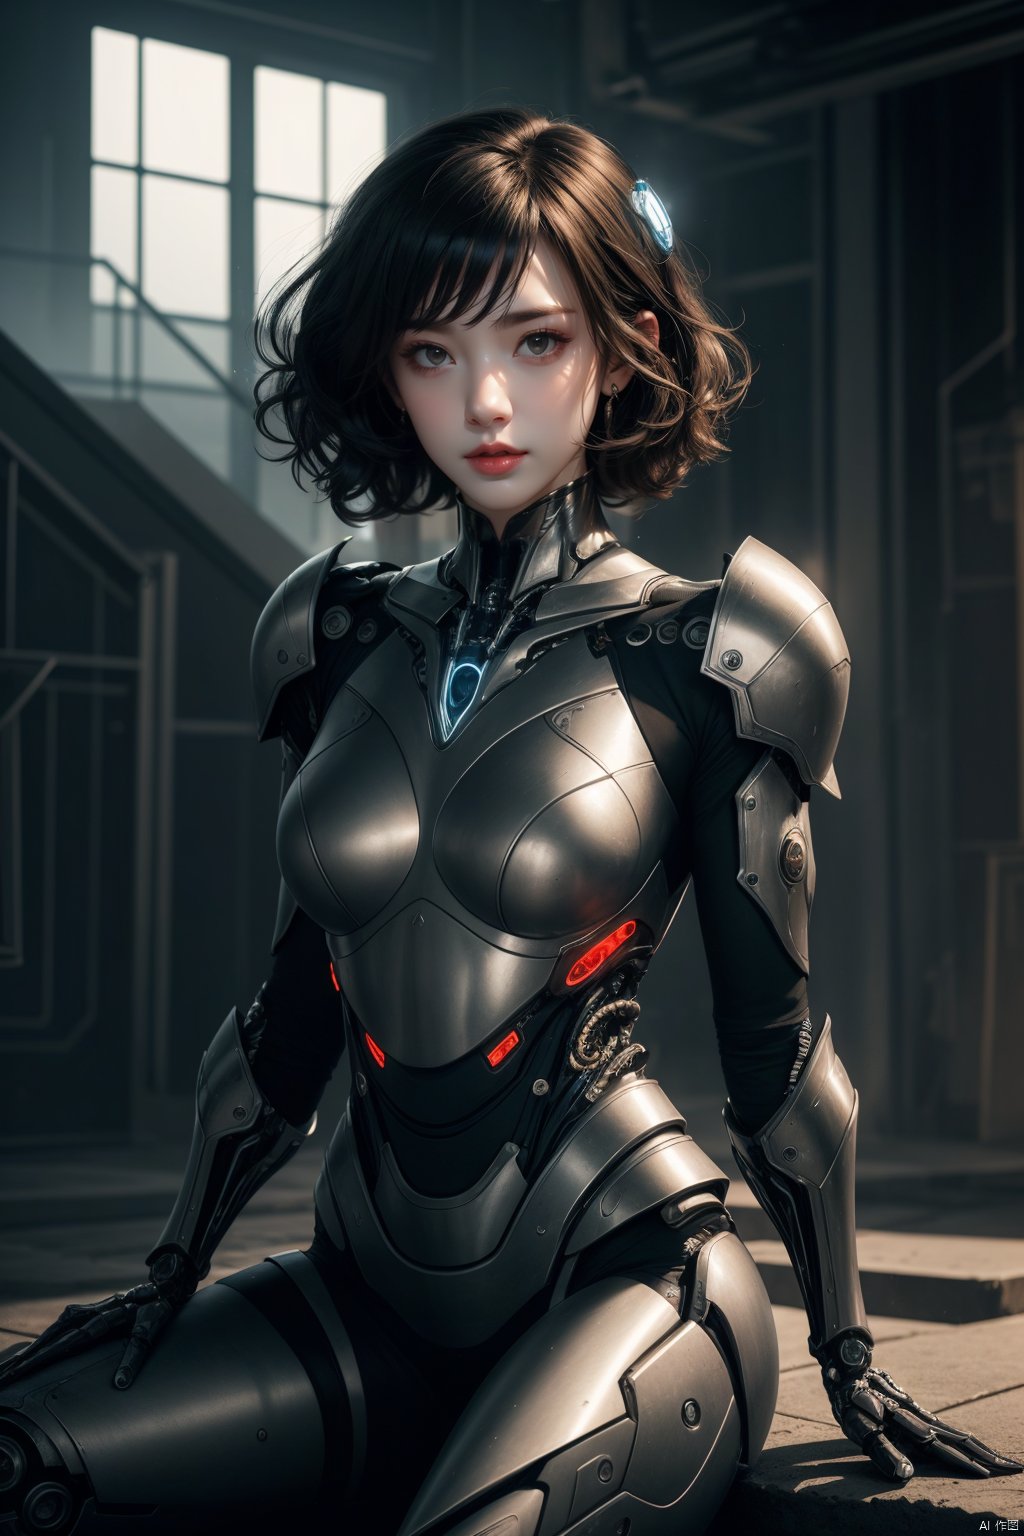  dramatic lighting,1girl,short curly hair,cyborg,armor,biomechanical environment,sitting